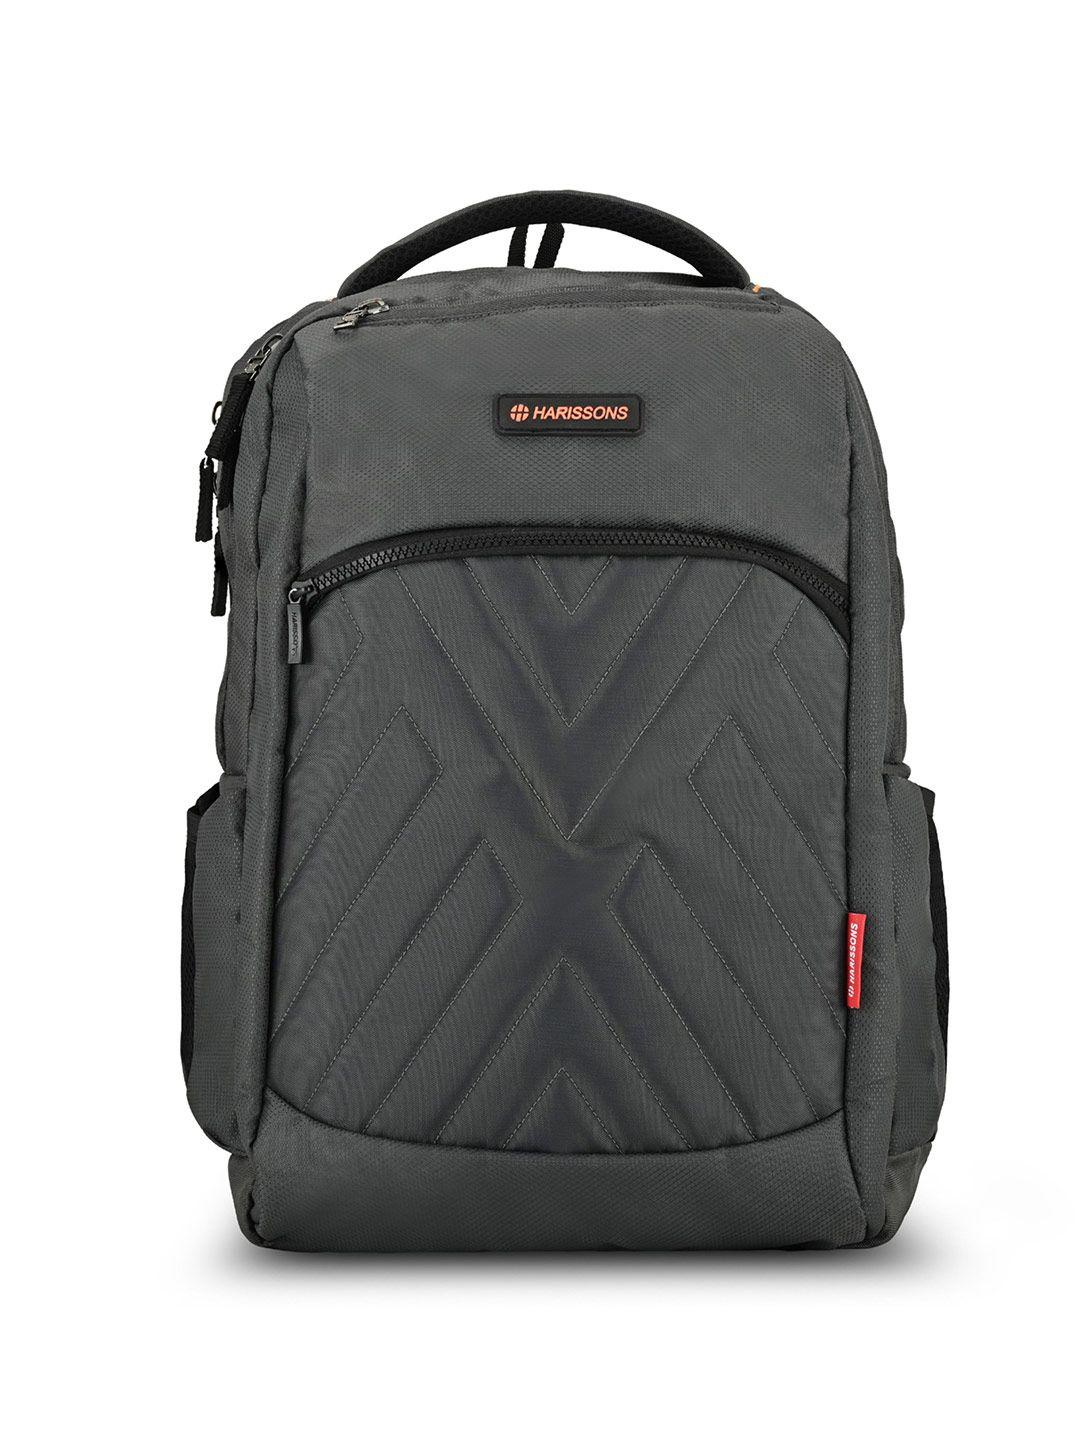 harissons unisex grey backpack